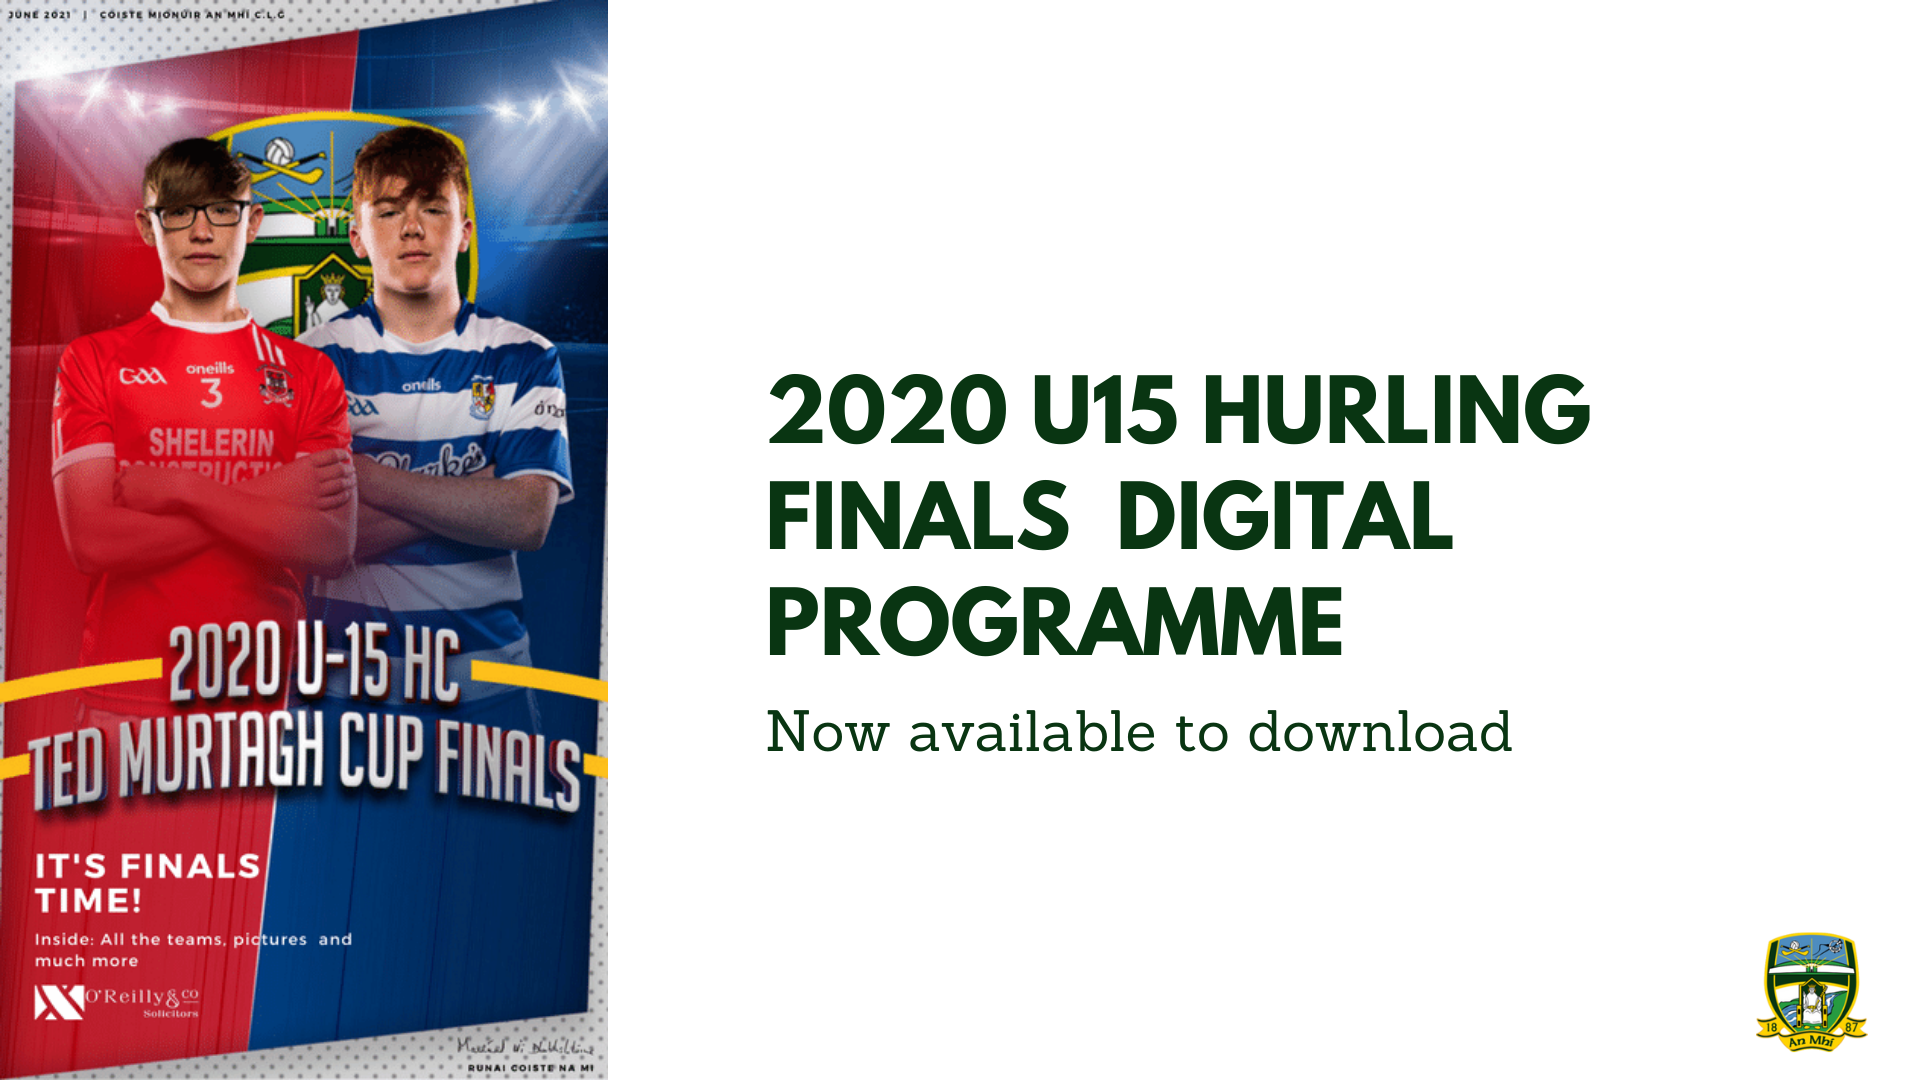 Download your U15 Hurling Finals Programme now